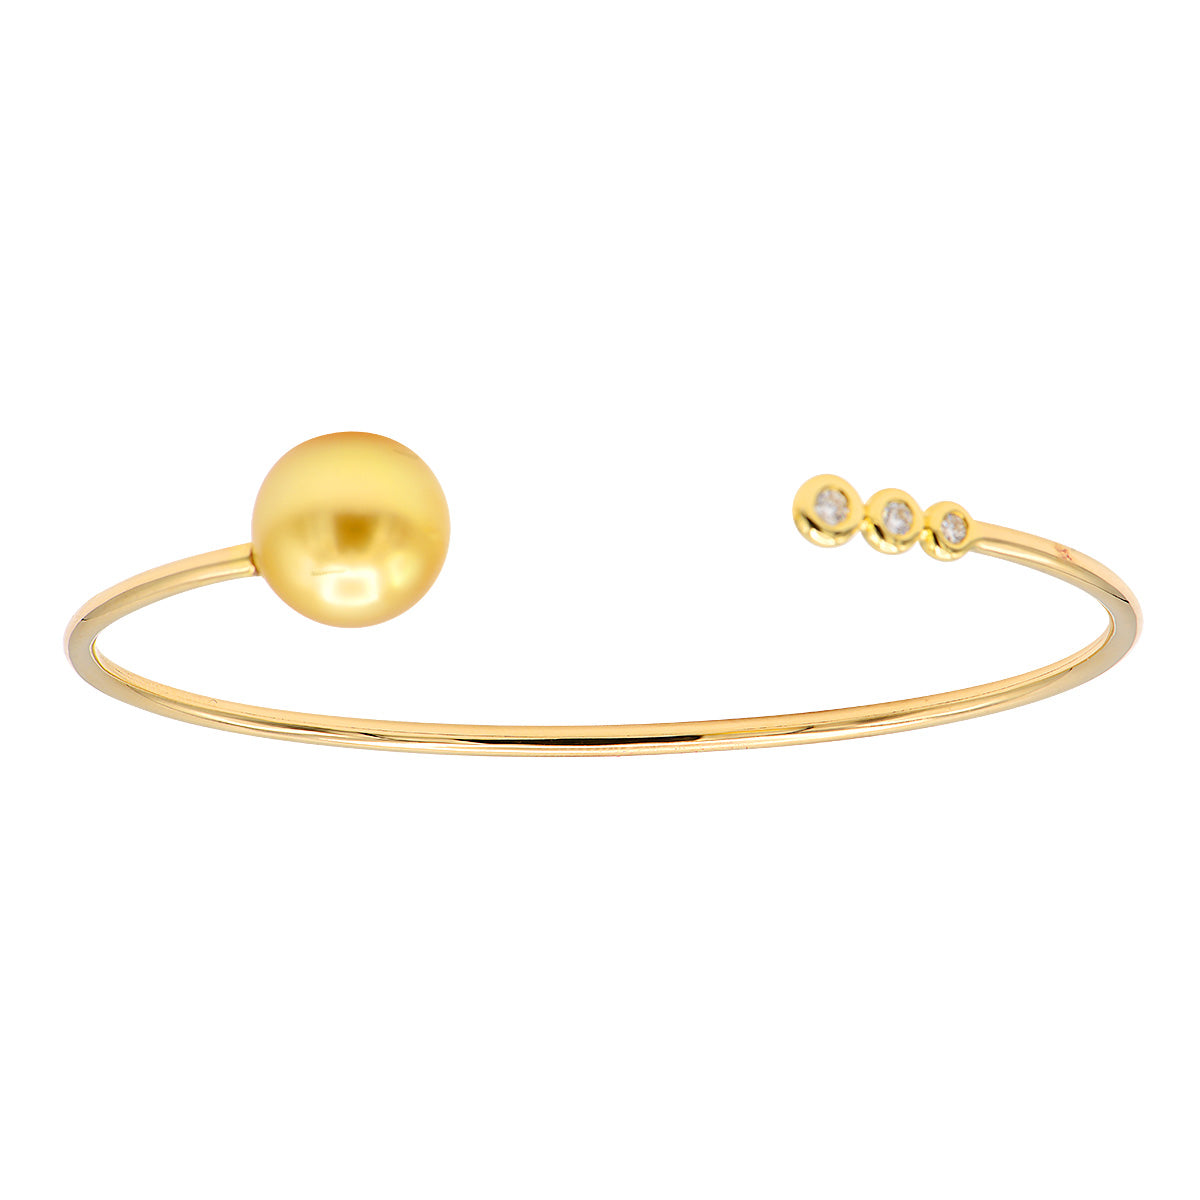 18KY Golden South Sea Pearl Bracelet, 11-12mm